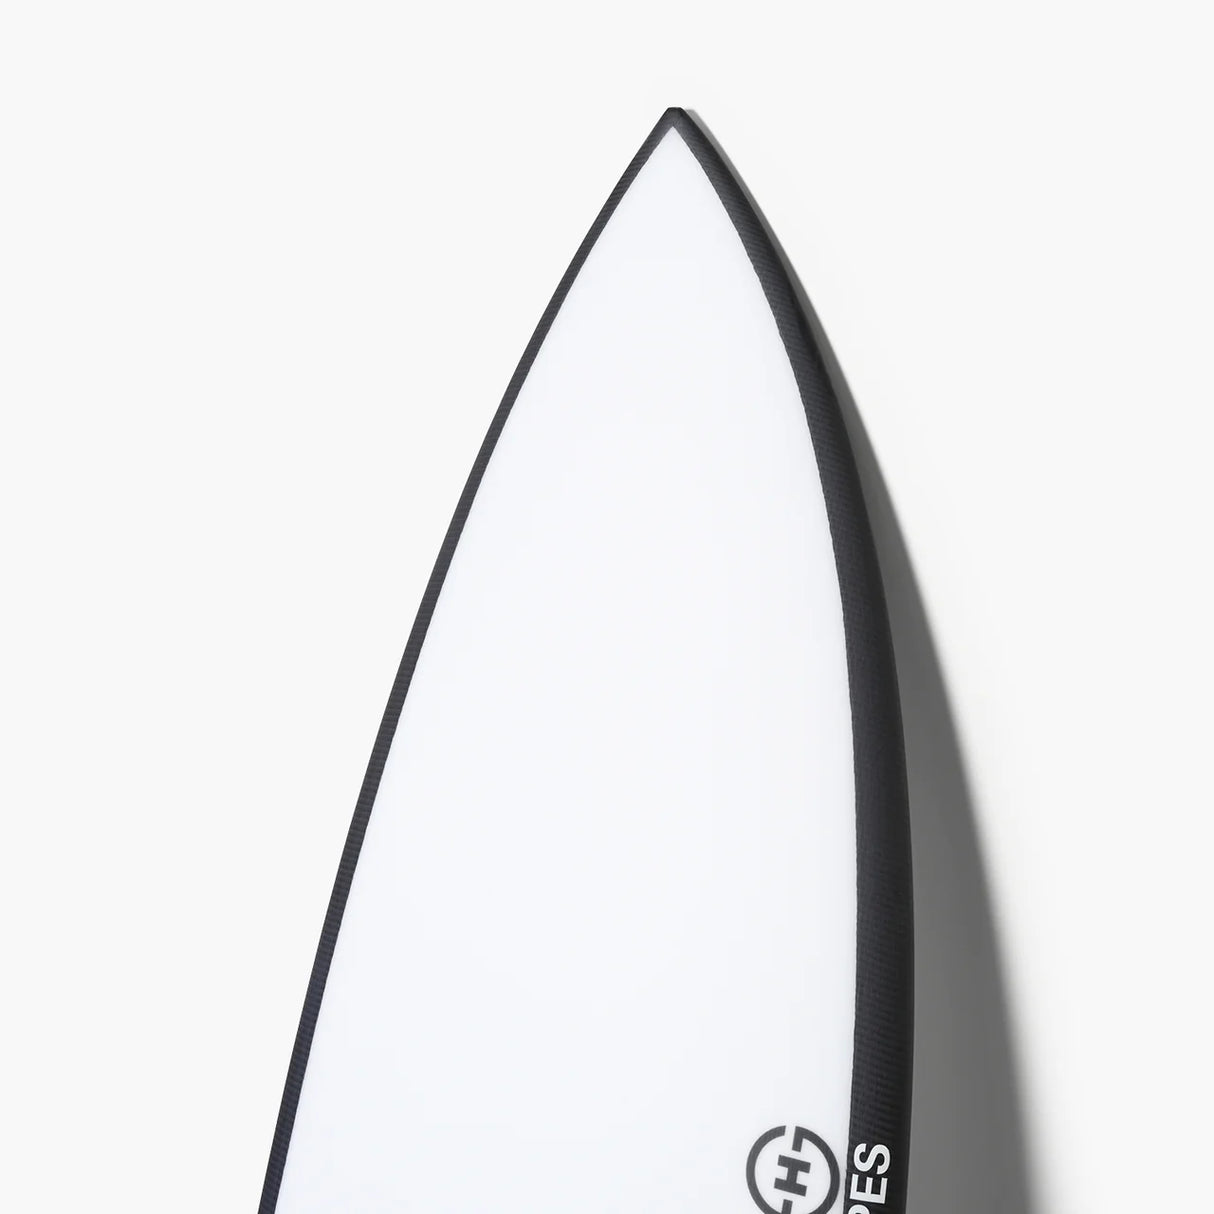 Hayden Shapes Holy Hypto Future Flex Surfboard